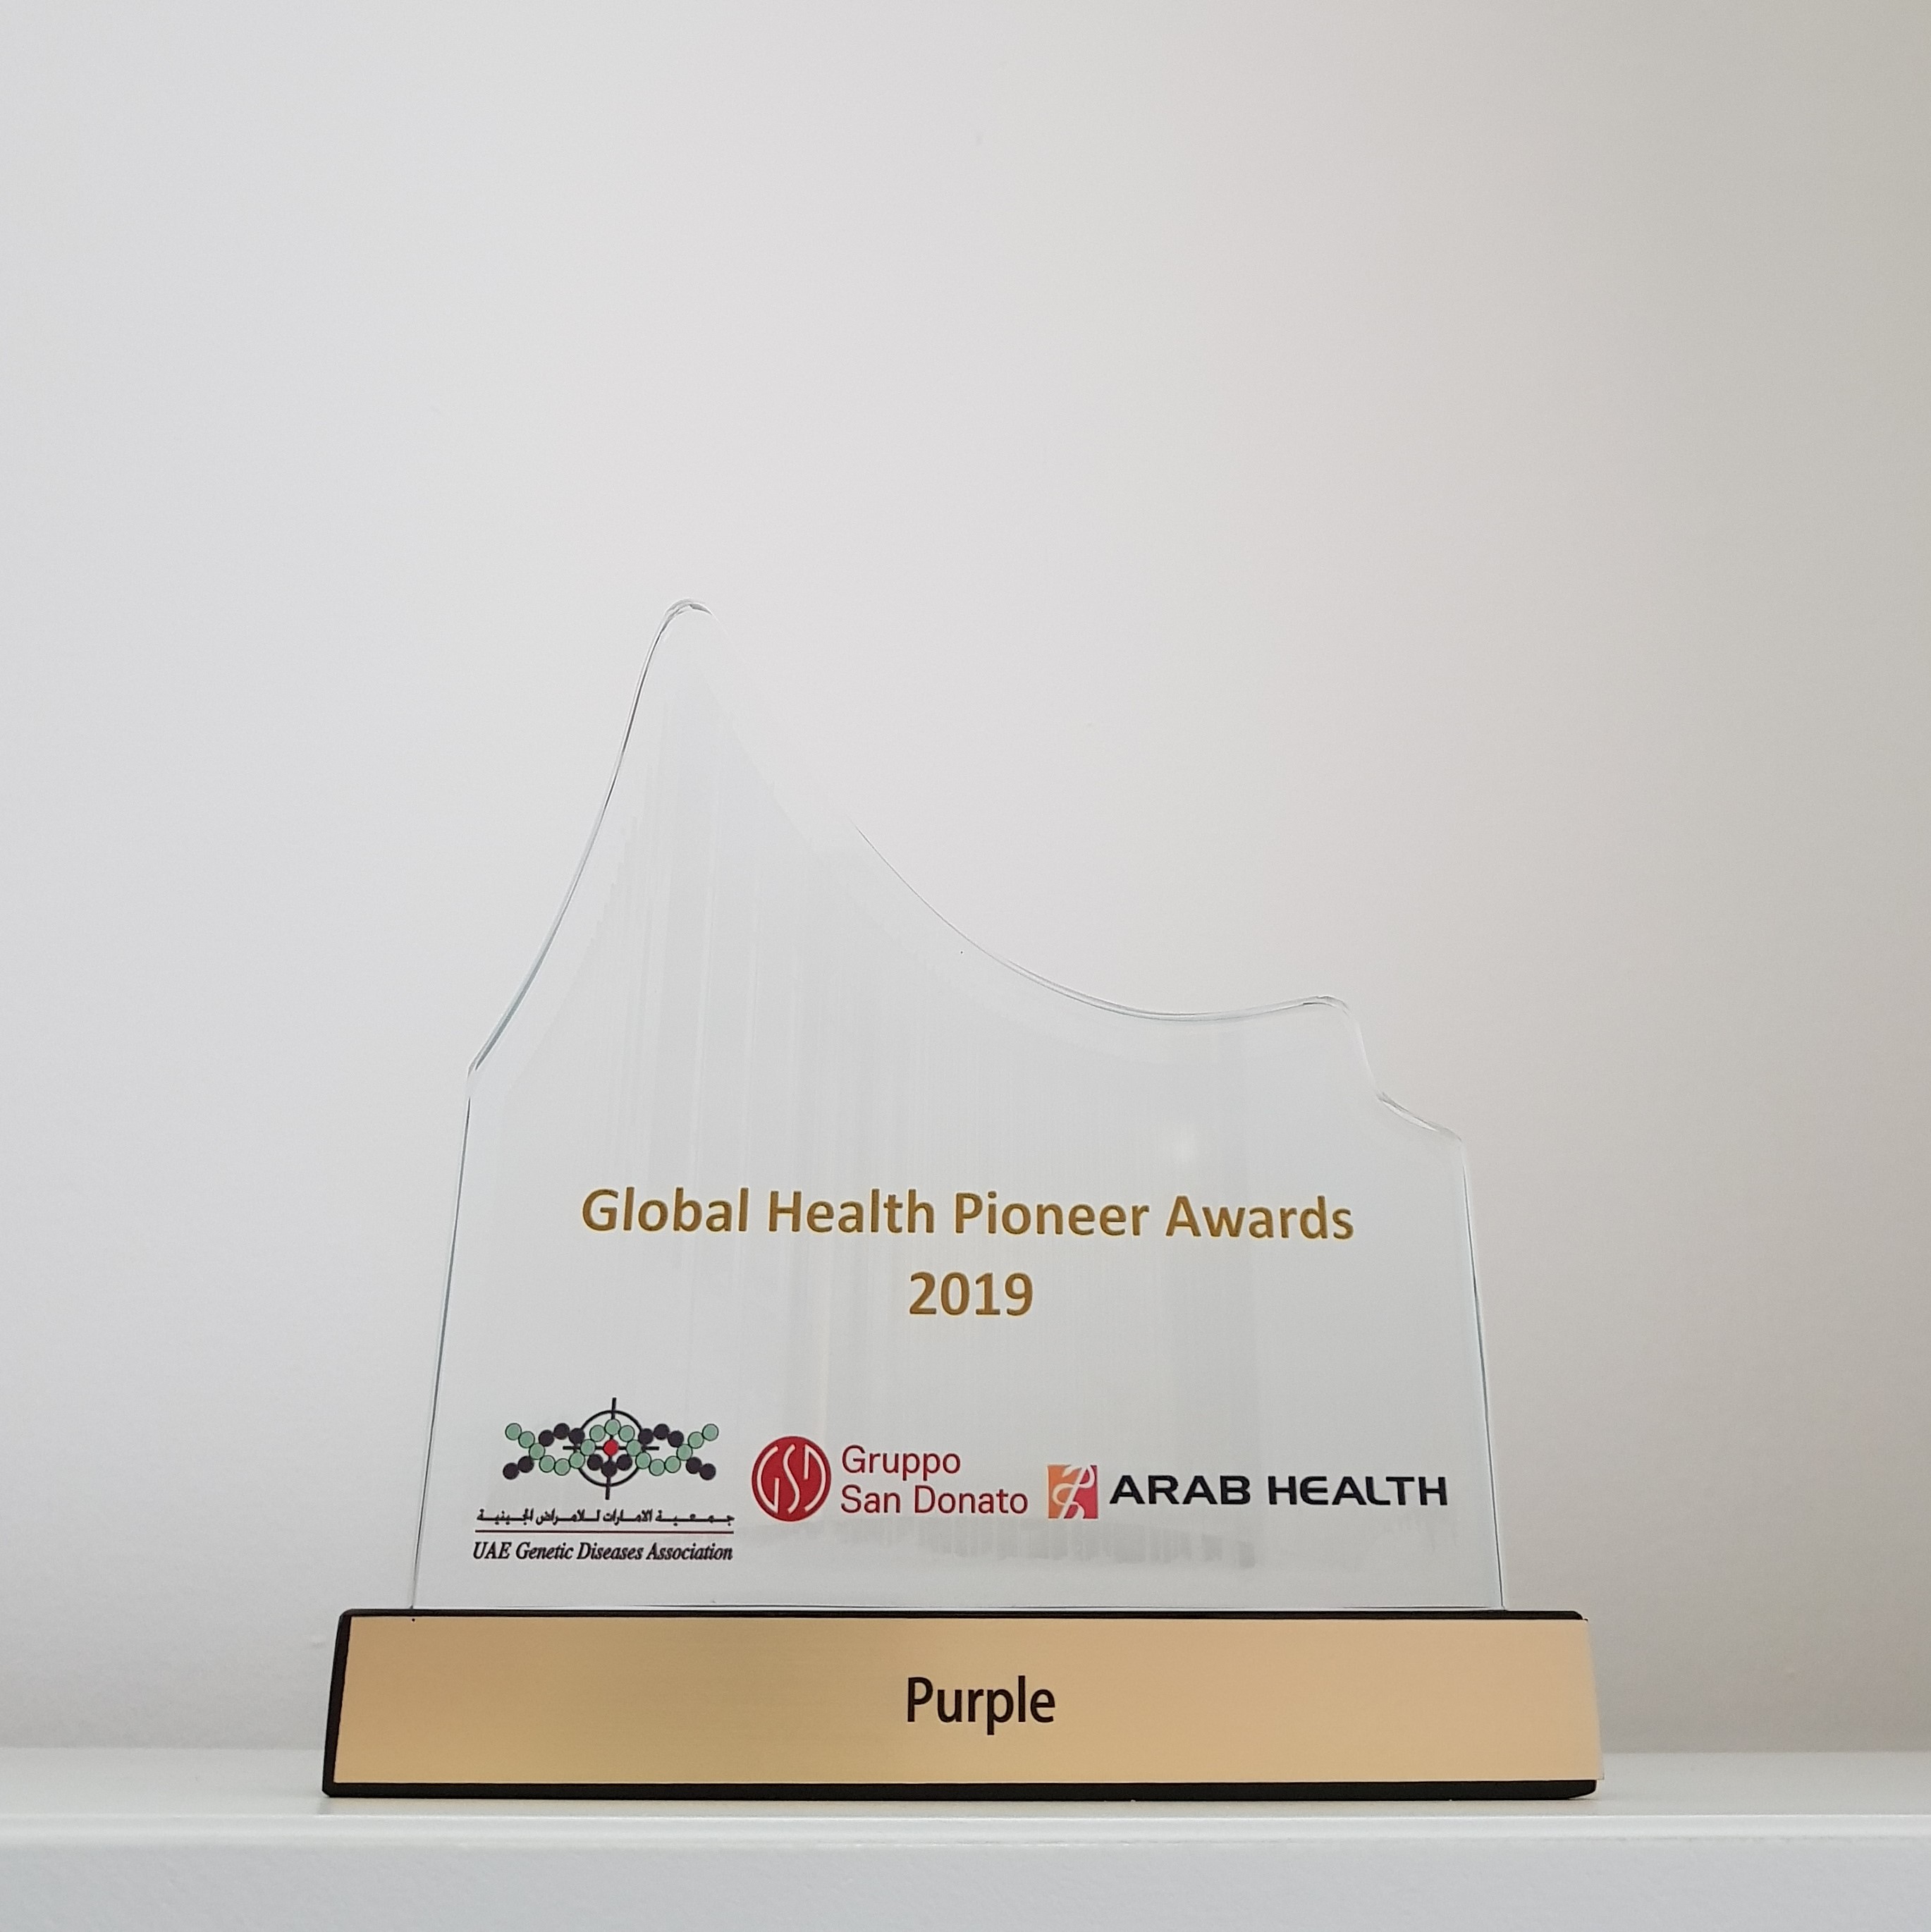 Purple Award for Global Health Pioneer Awards 2019